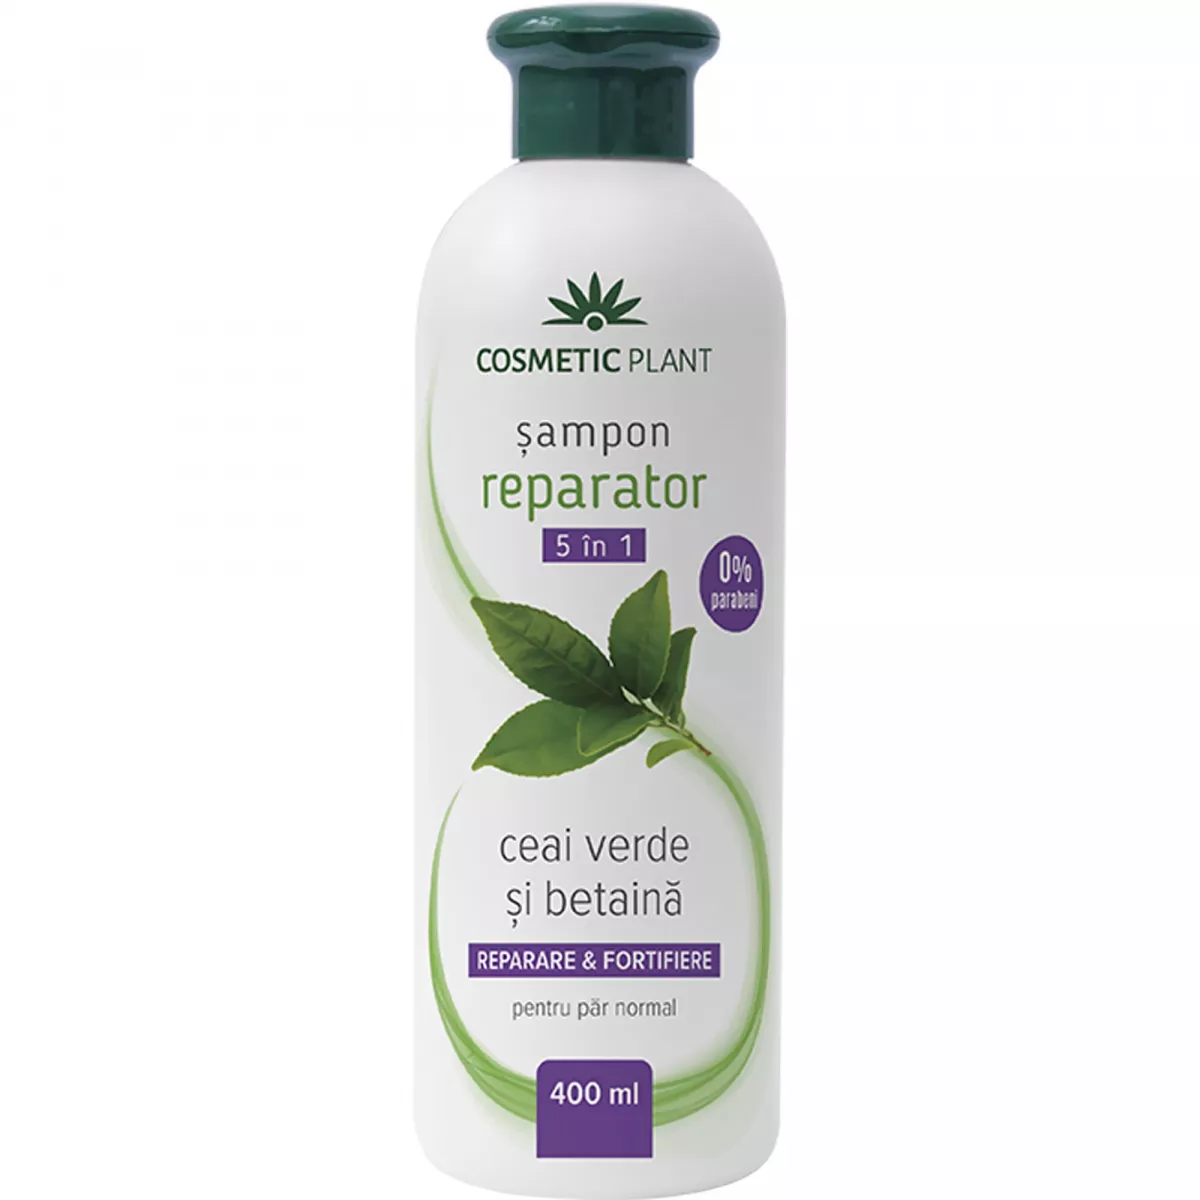 Sampon reparator 5 in 1 cu ceai verde si betaina, 400 ml, Cosmetic Plant, [],remediumfarm.ro